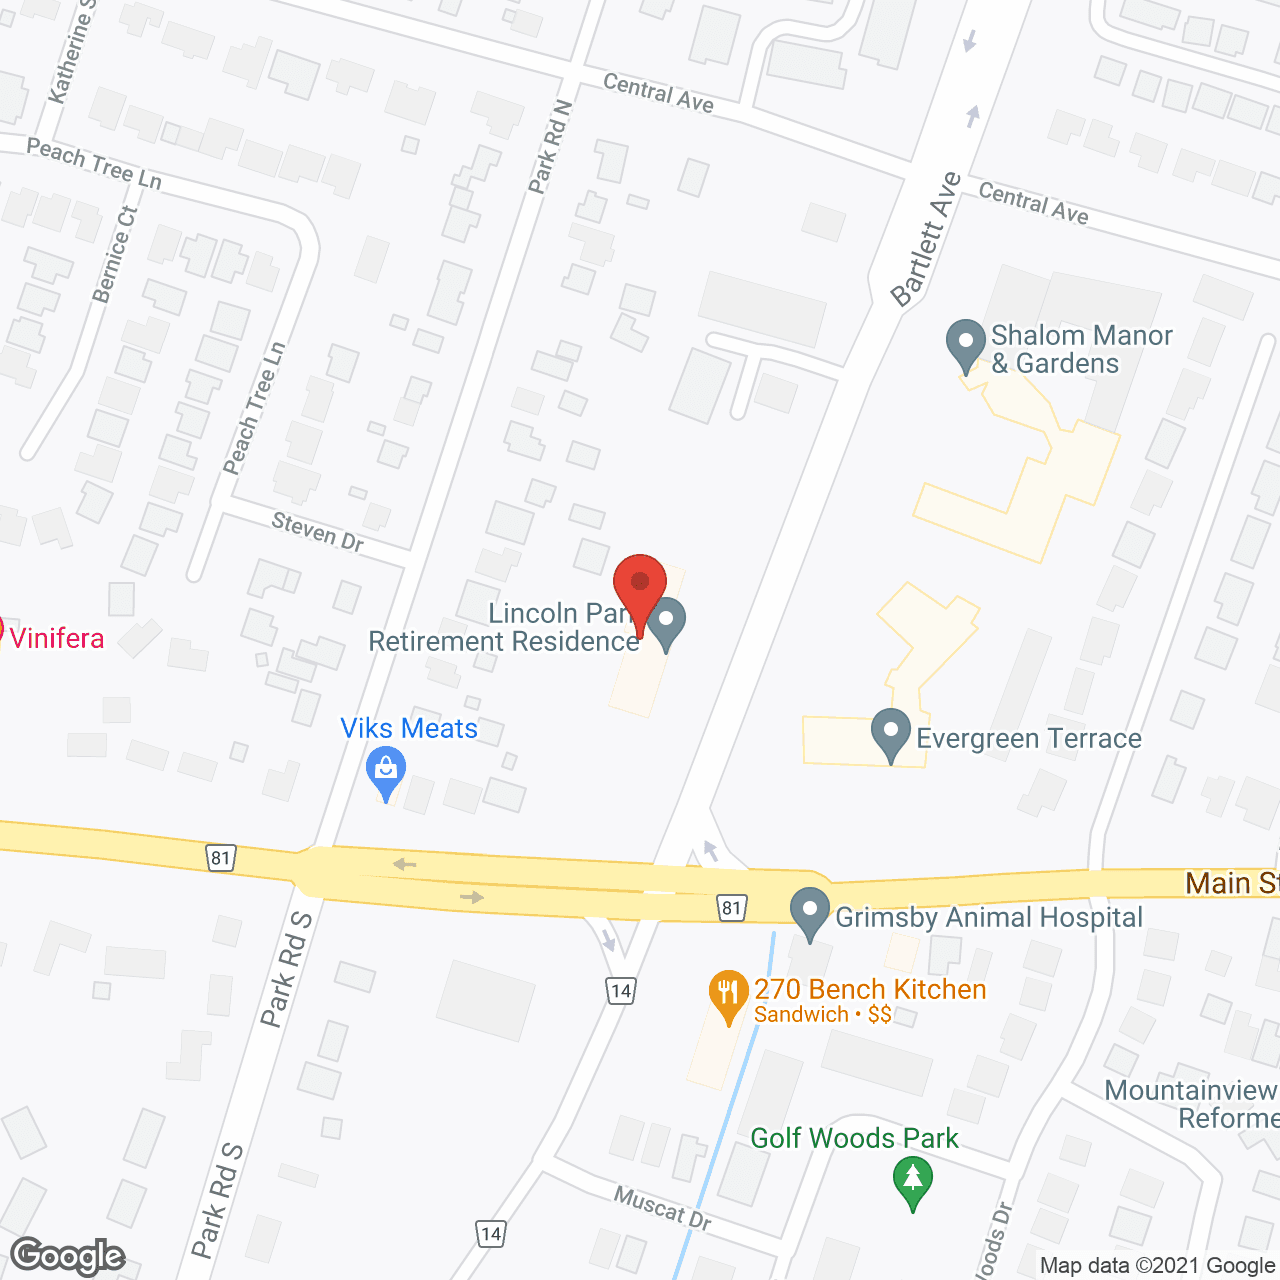 Lincoln Park Retirement Residence in google map